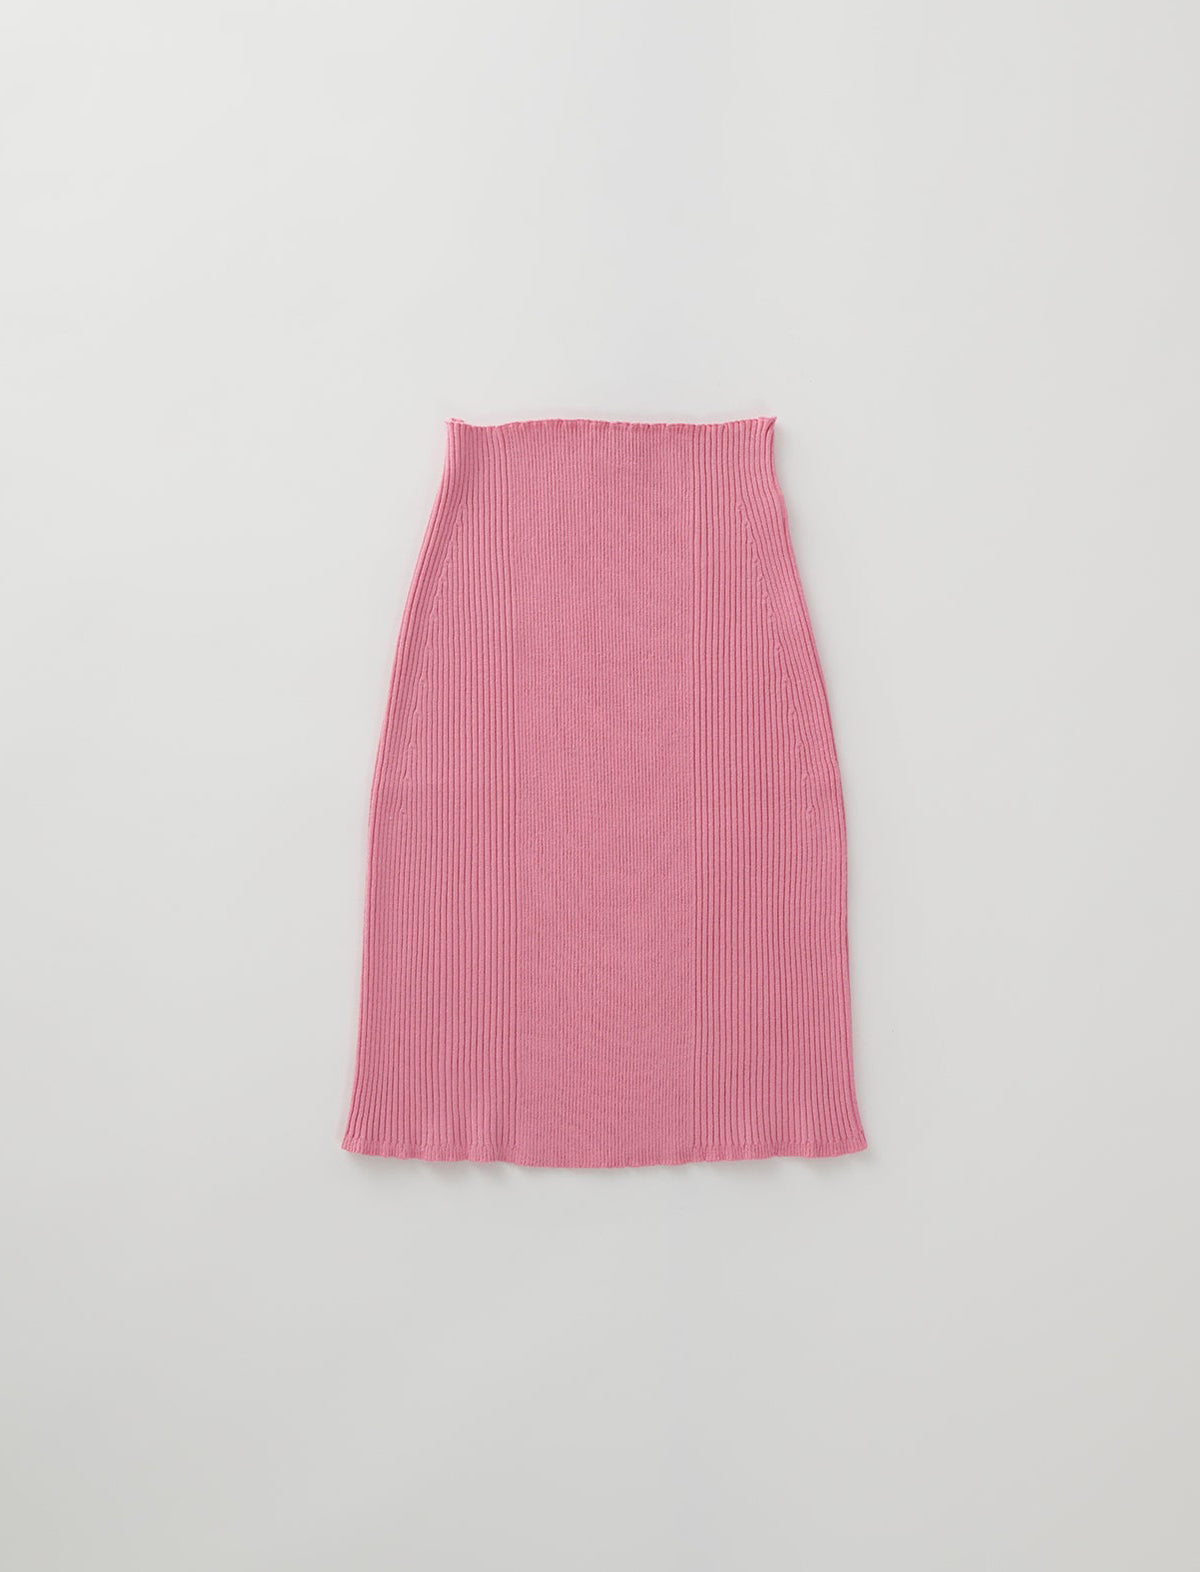 AERON ZERO003 Mini Skirt in Petal Pink